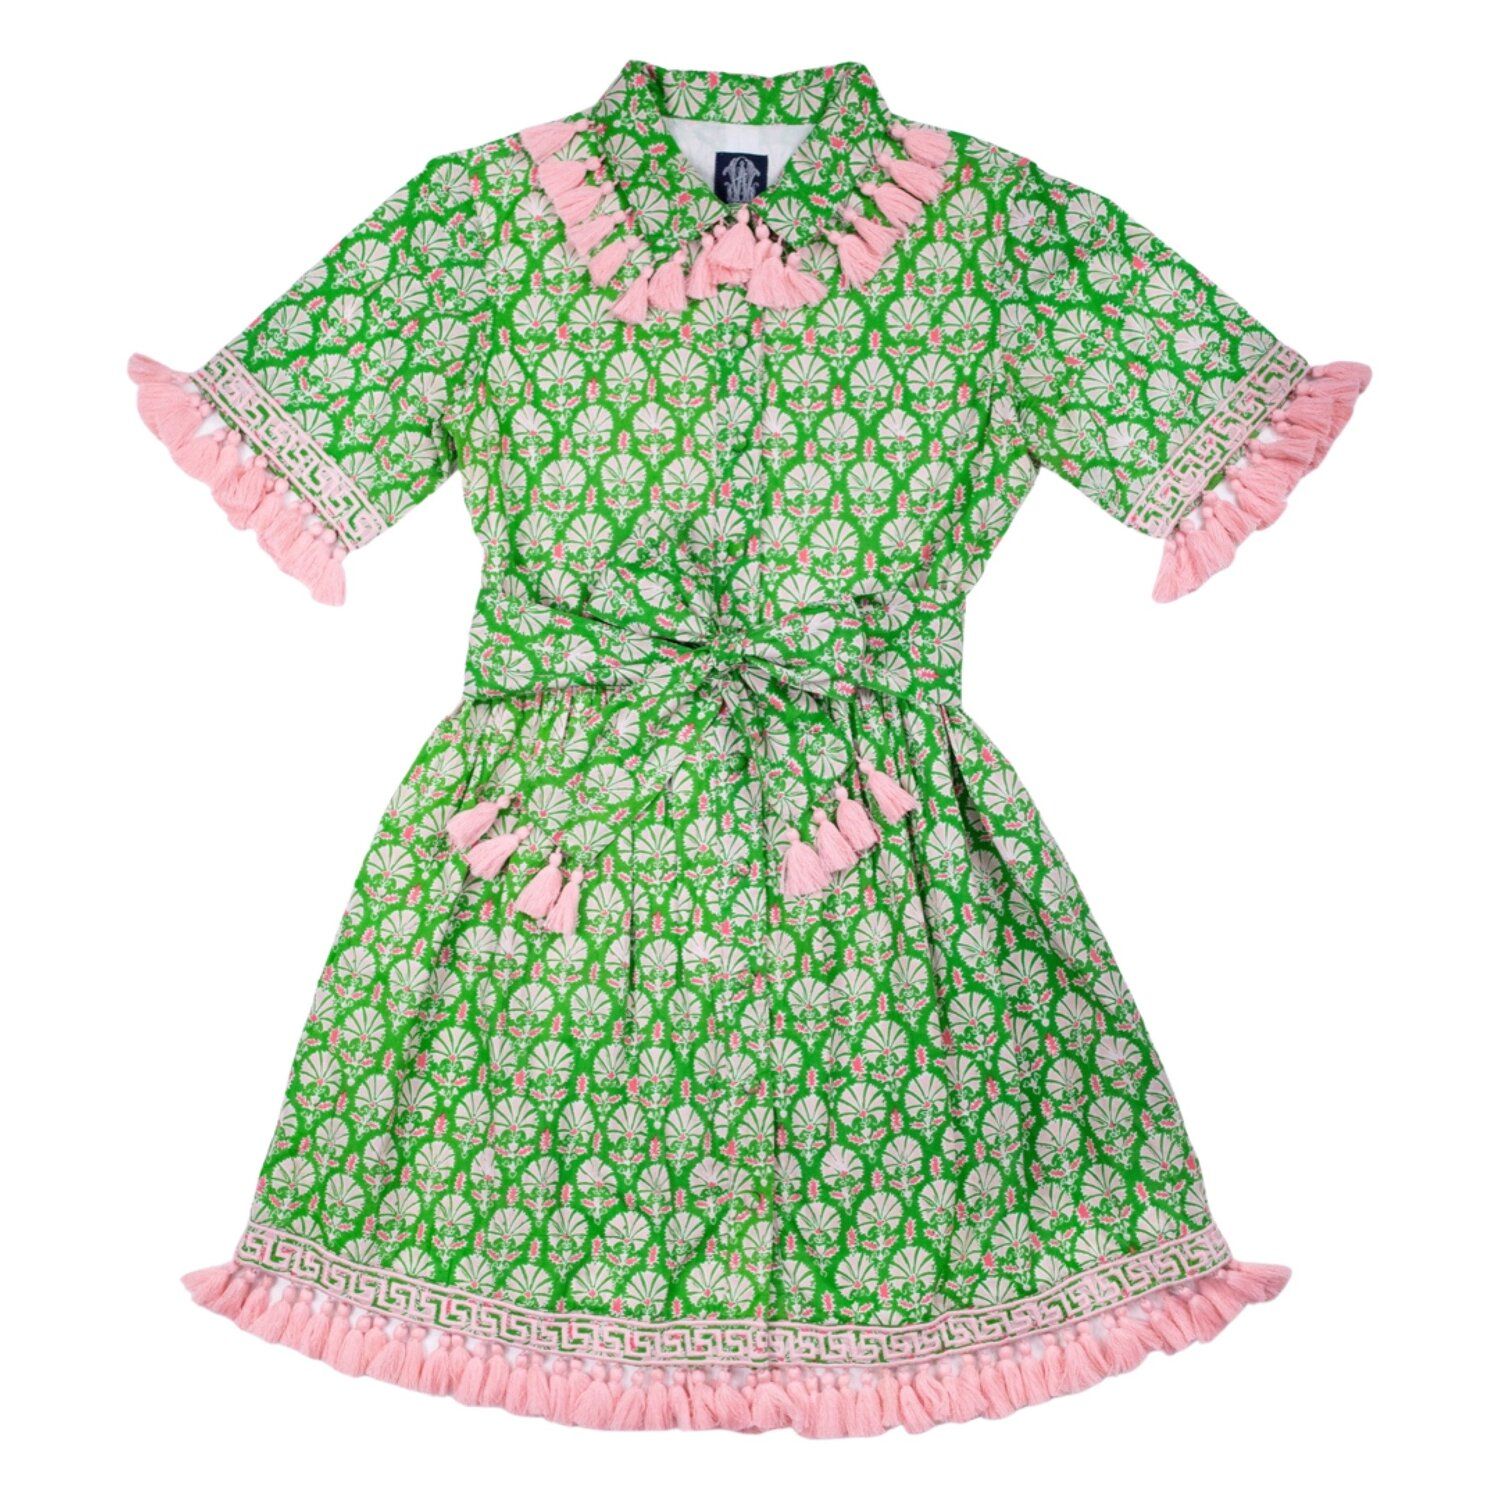 Augusta Dress in green flower motif print — Elizabeth Wilson | Elizabeth Wilson Designs